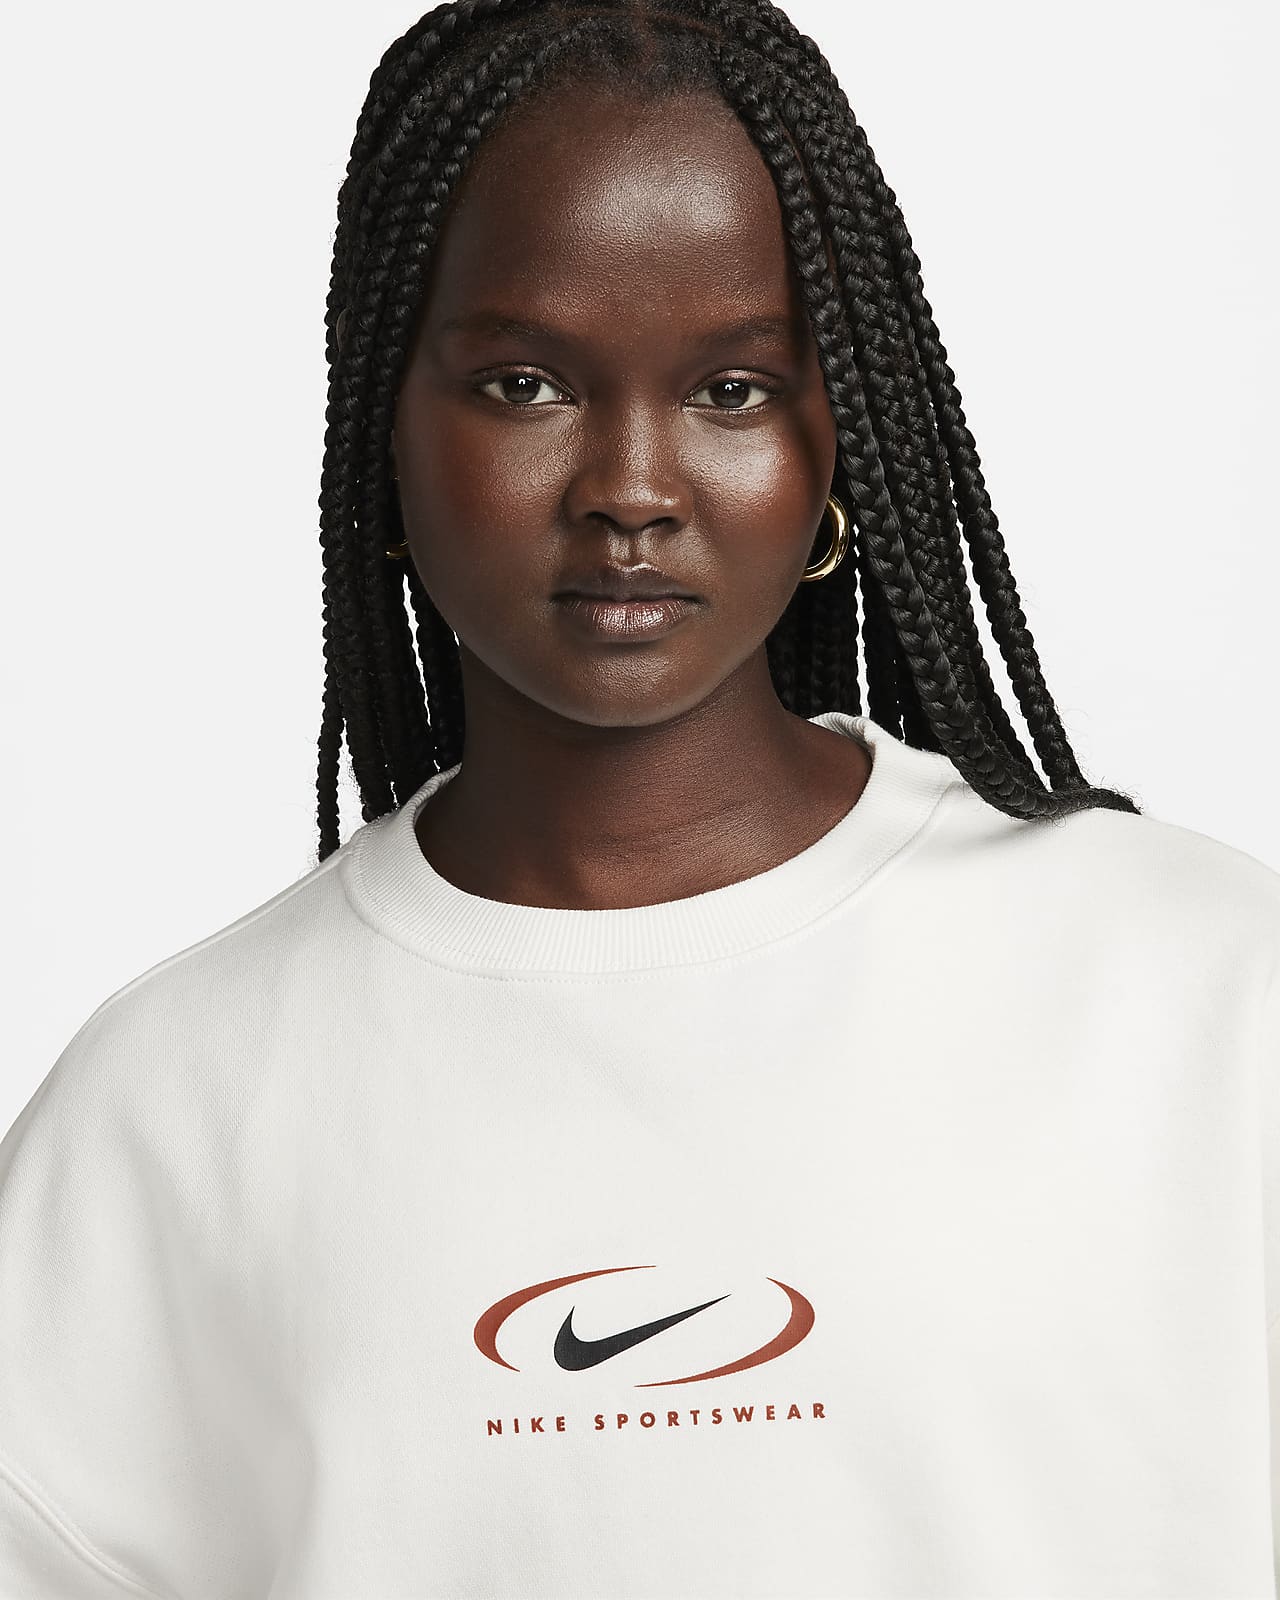 Nike Sportswear Phoenix Fleece Women's Over-Oversized Crew-Neck Sweatshirt.  Nike LU